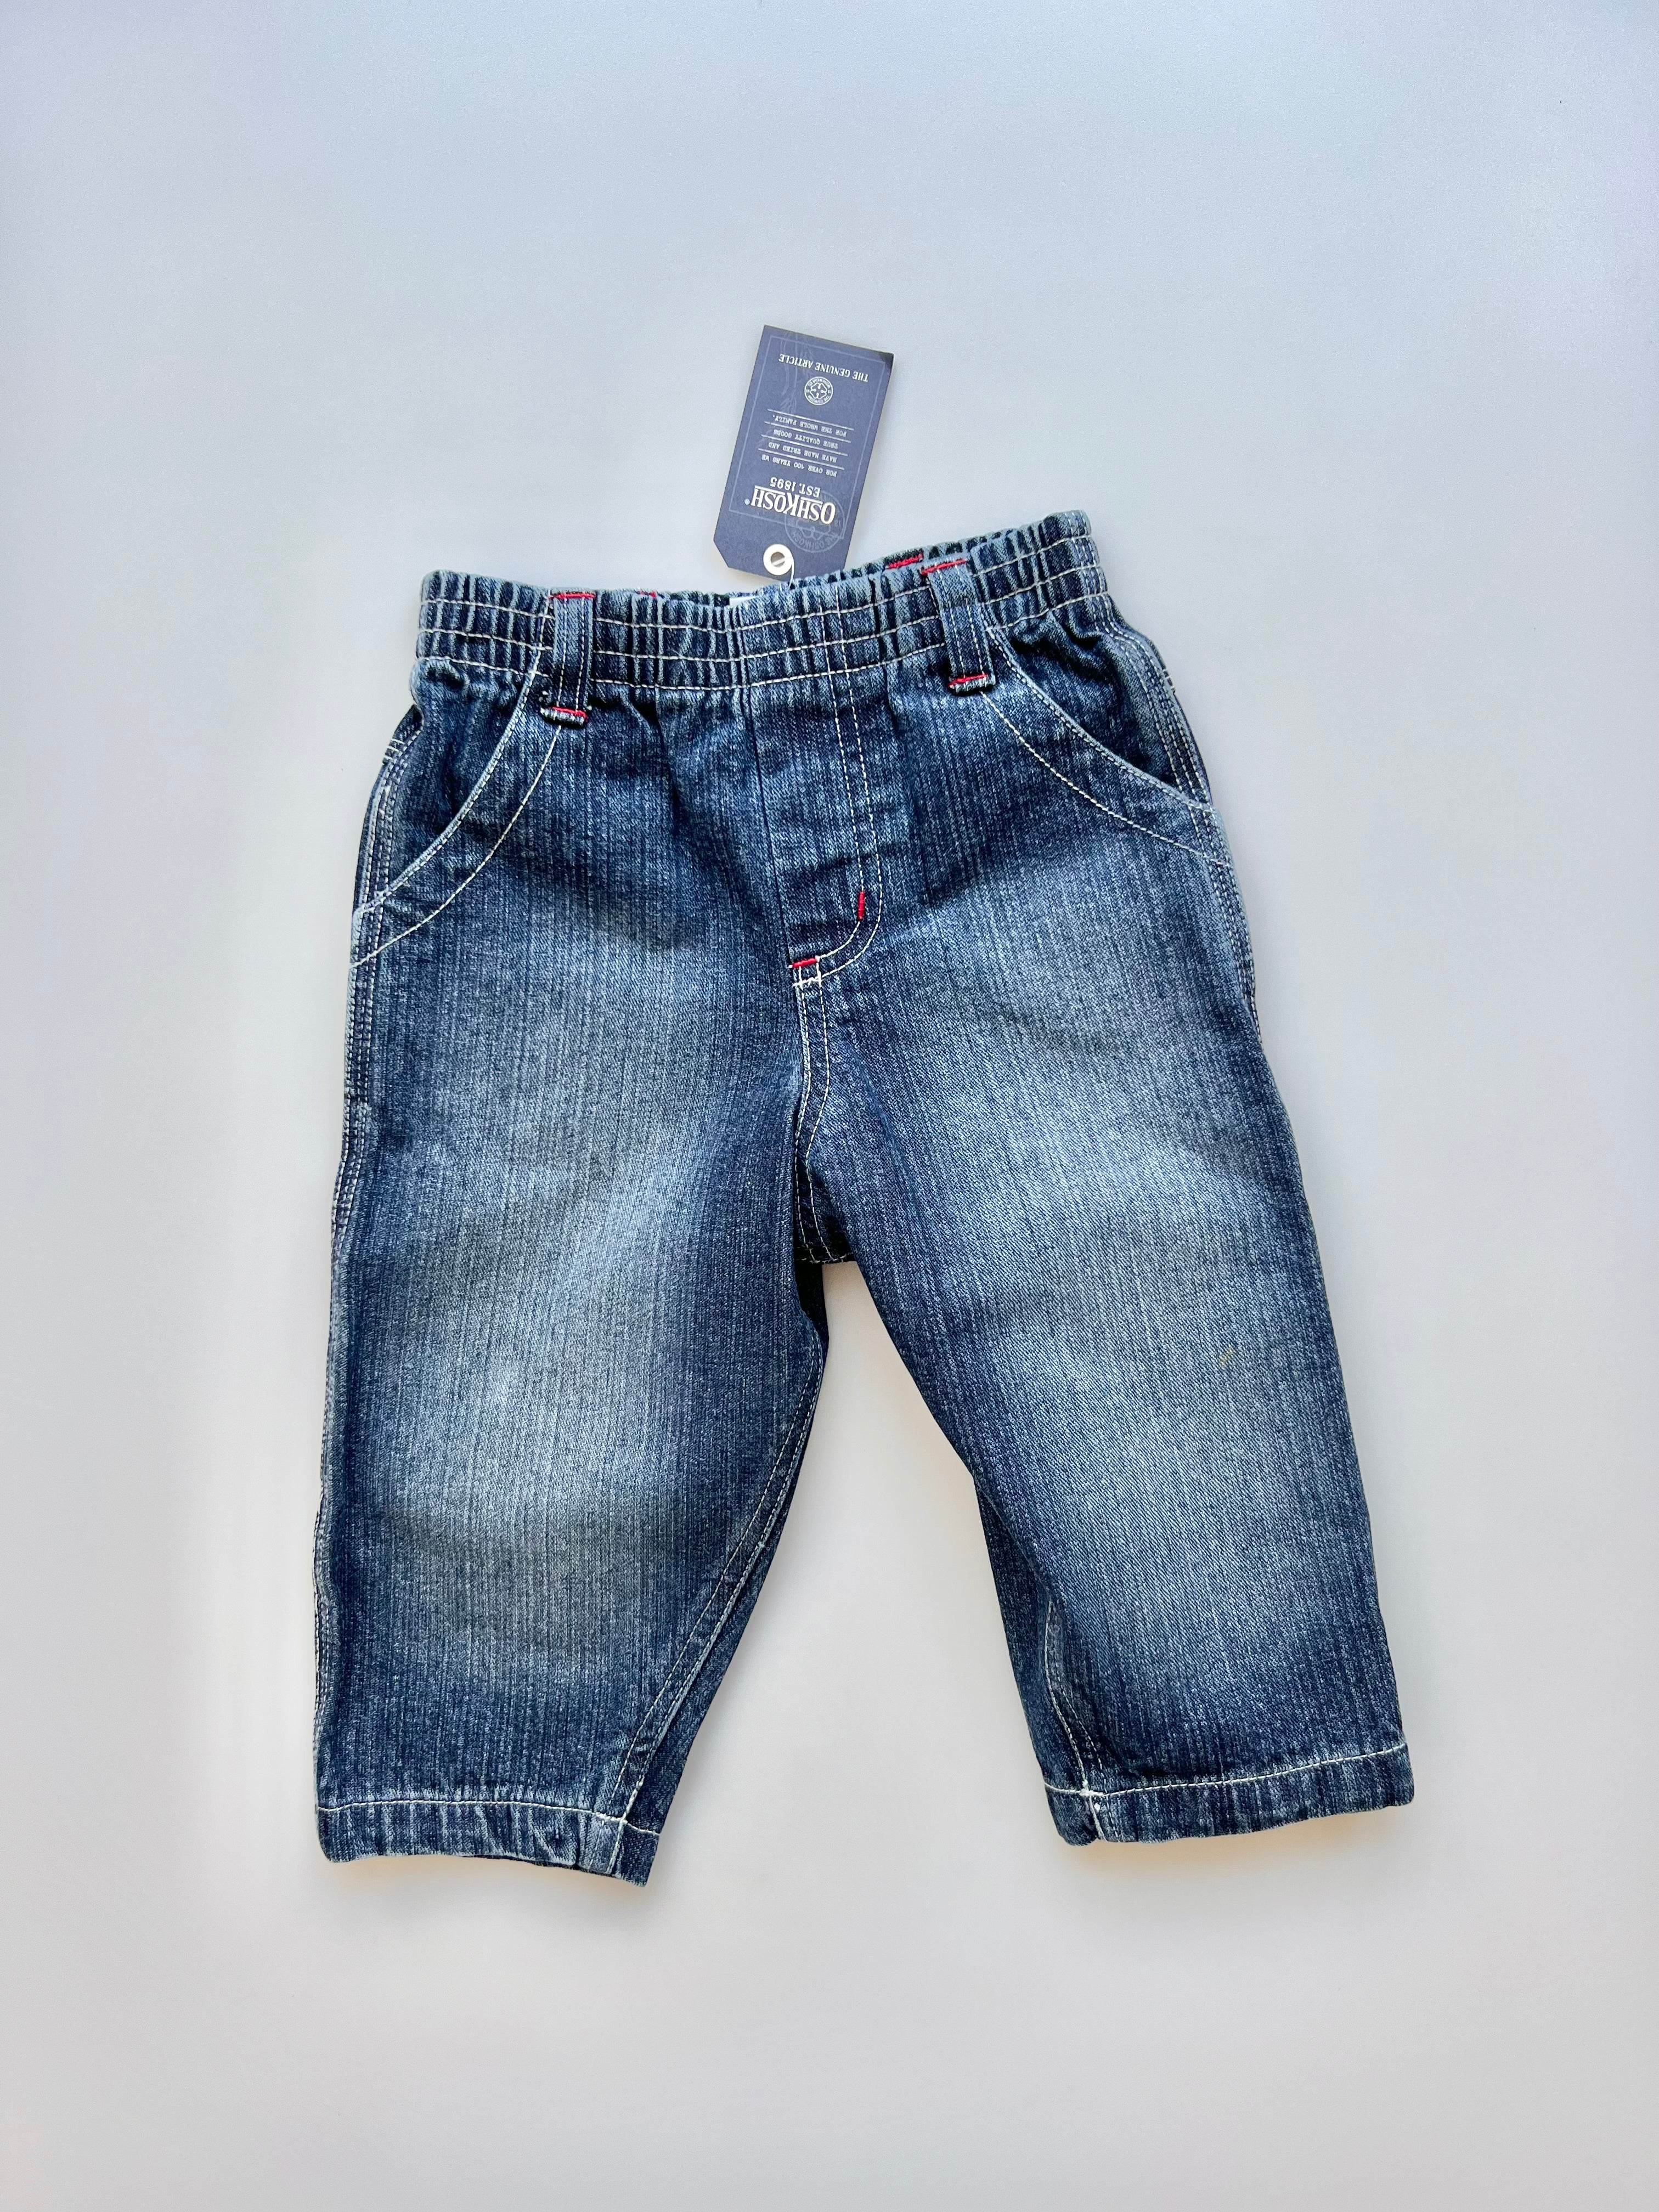 OshKosh B'gosh Carpenter Jeans 12 Months